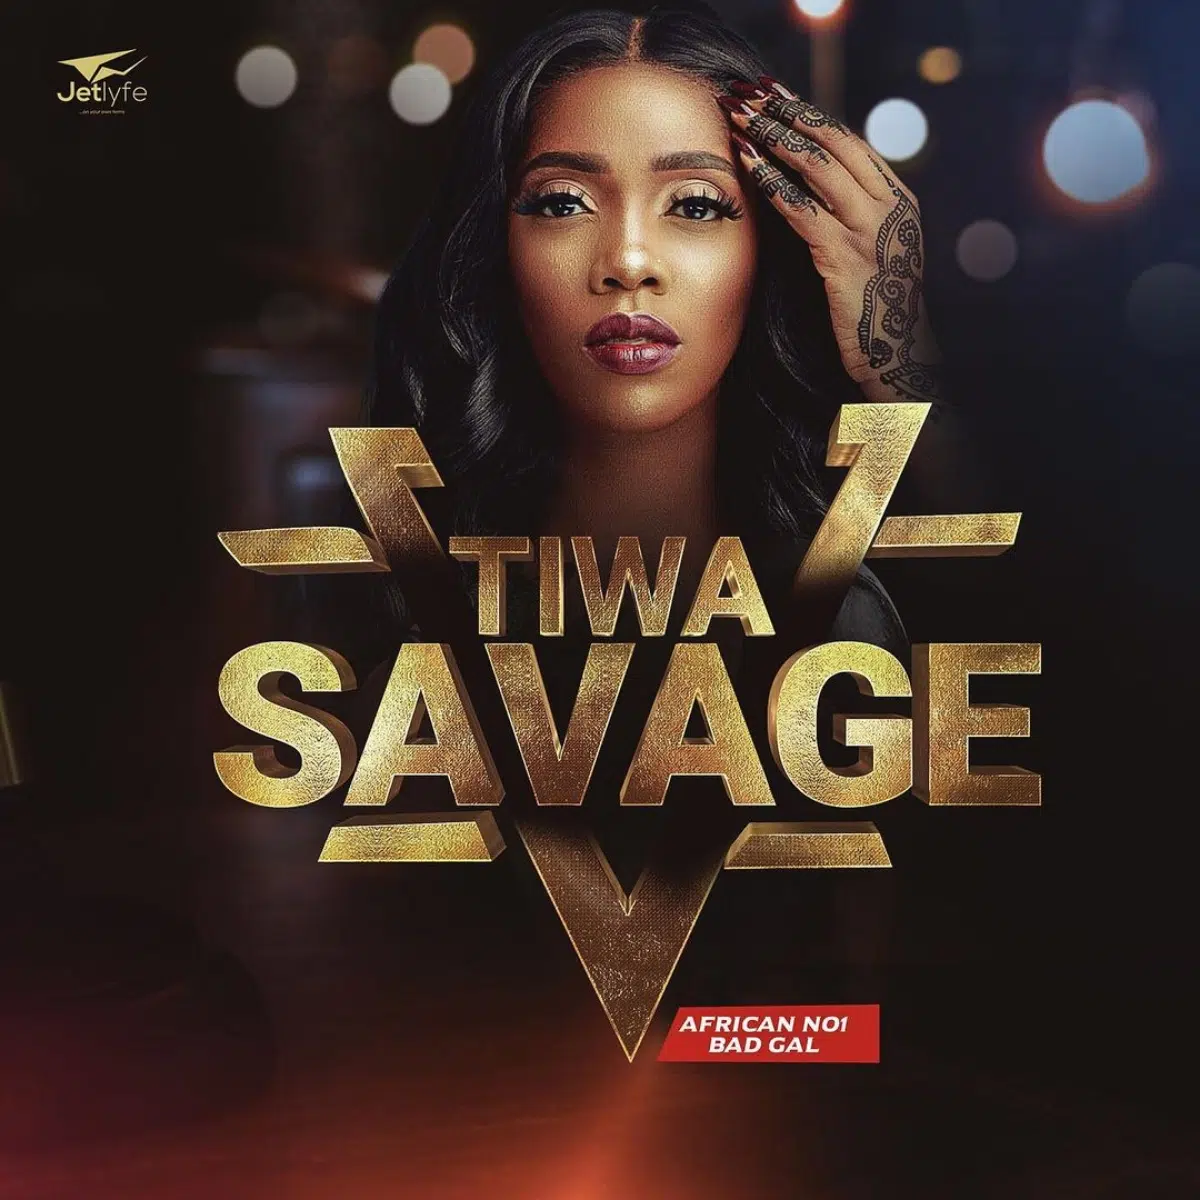 DOWNLOAD: Tiwa Savage – “All Over” Video + Audio Mp3